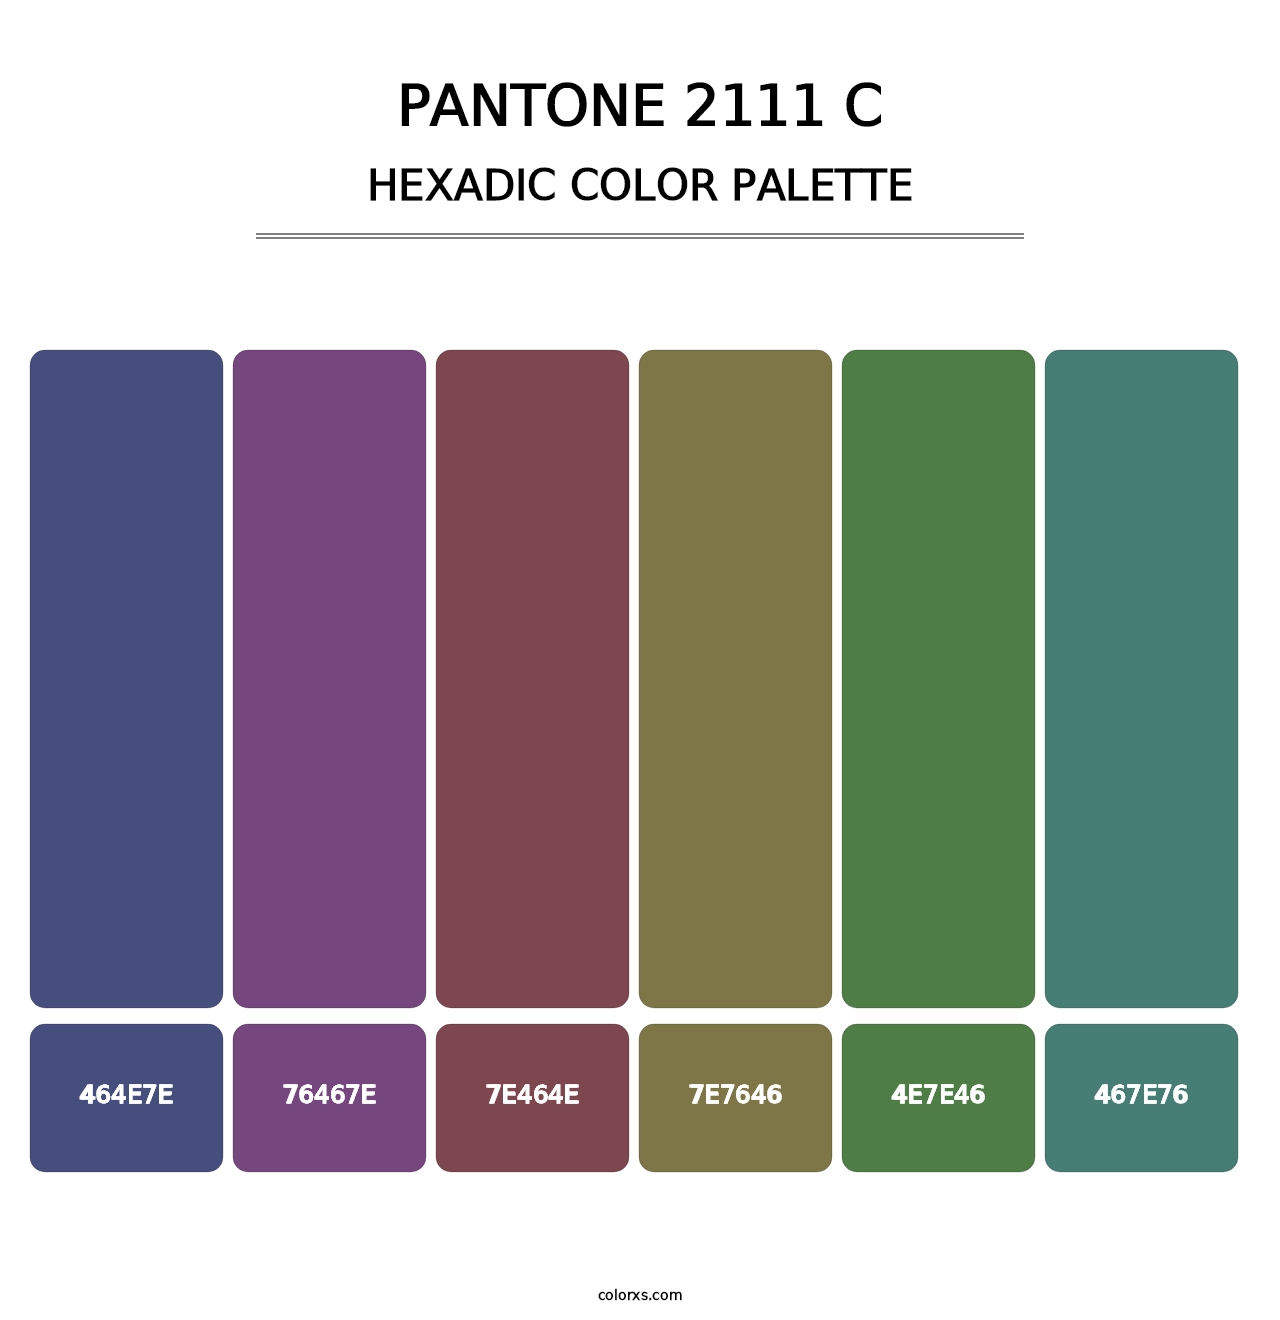 PANTONE 2111 C - Hexadic Color Palette